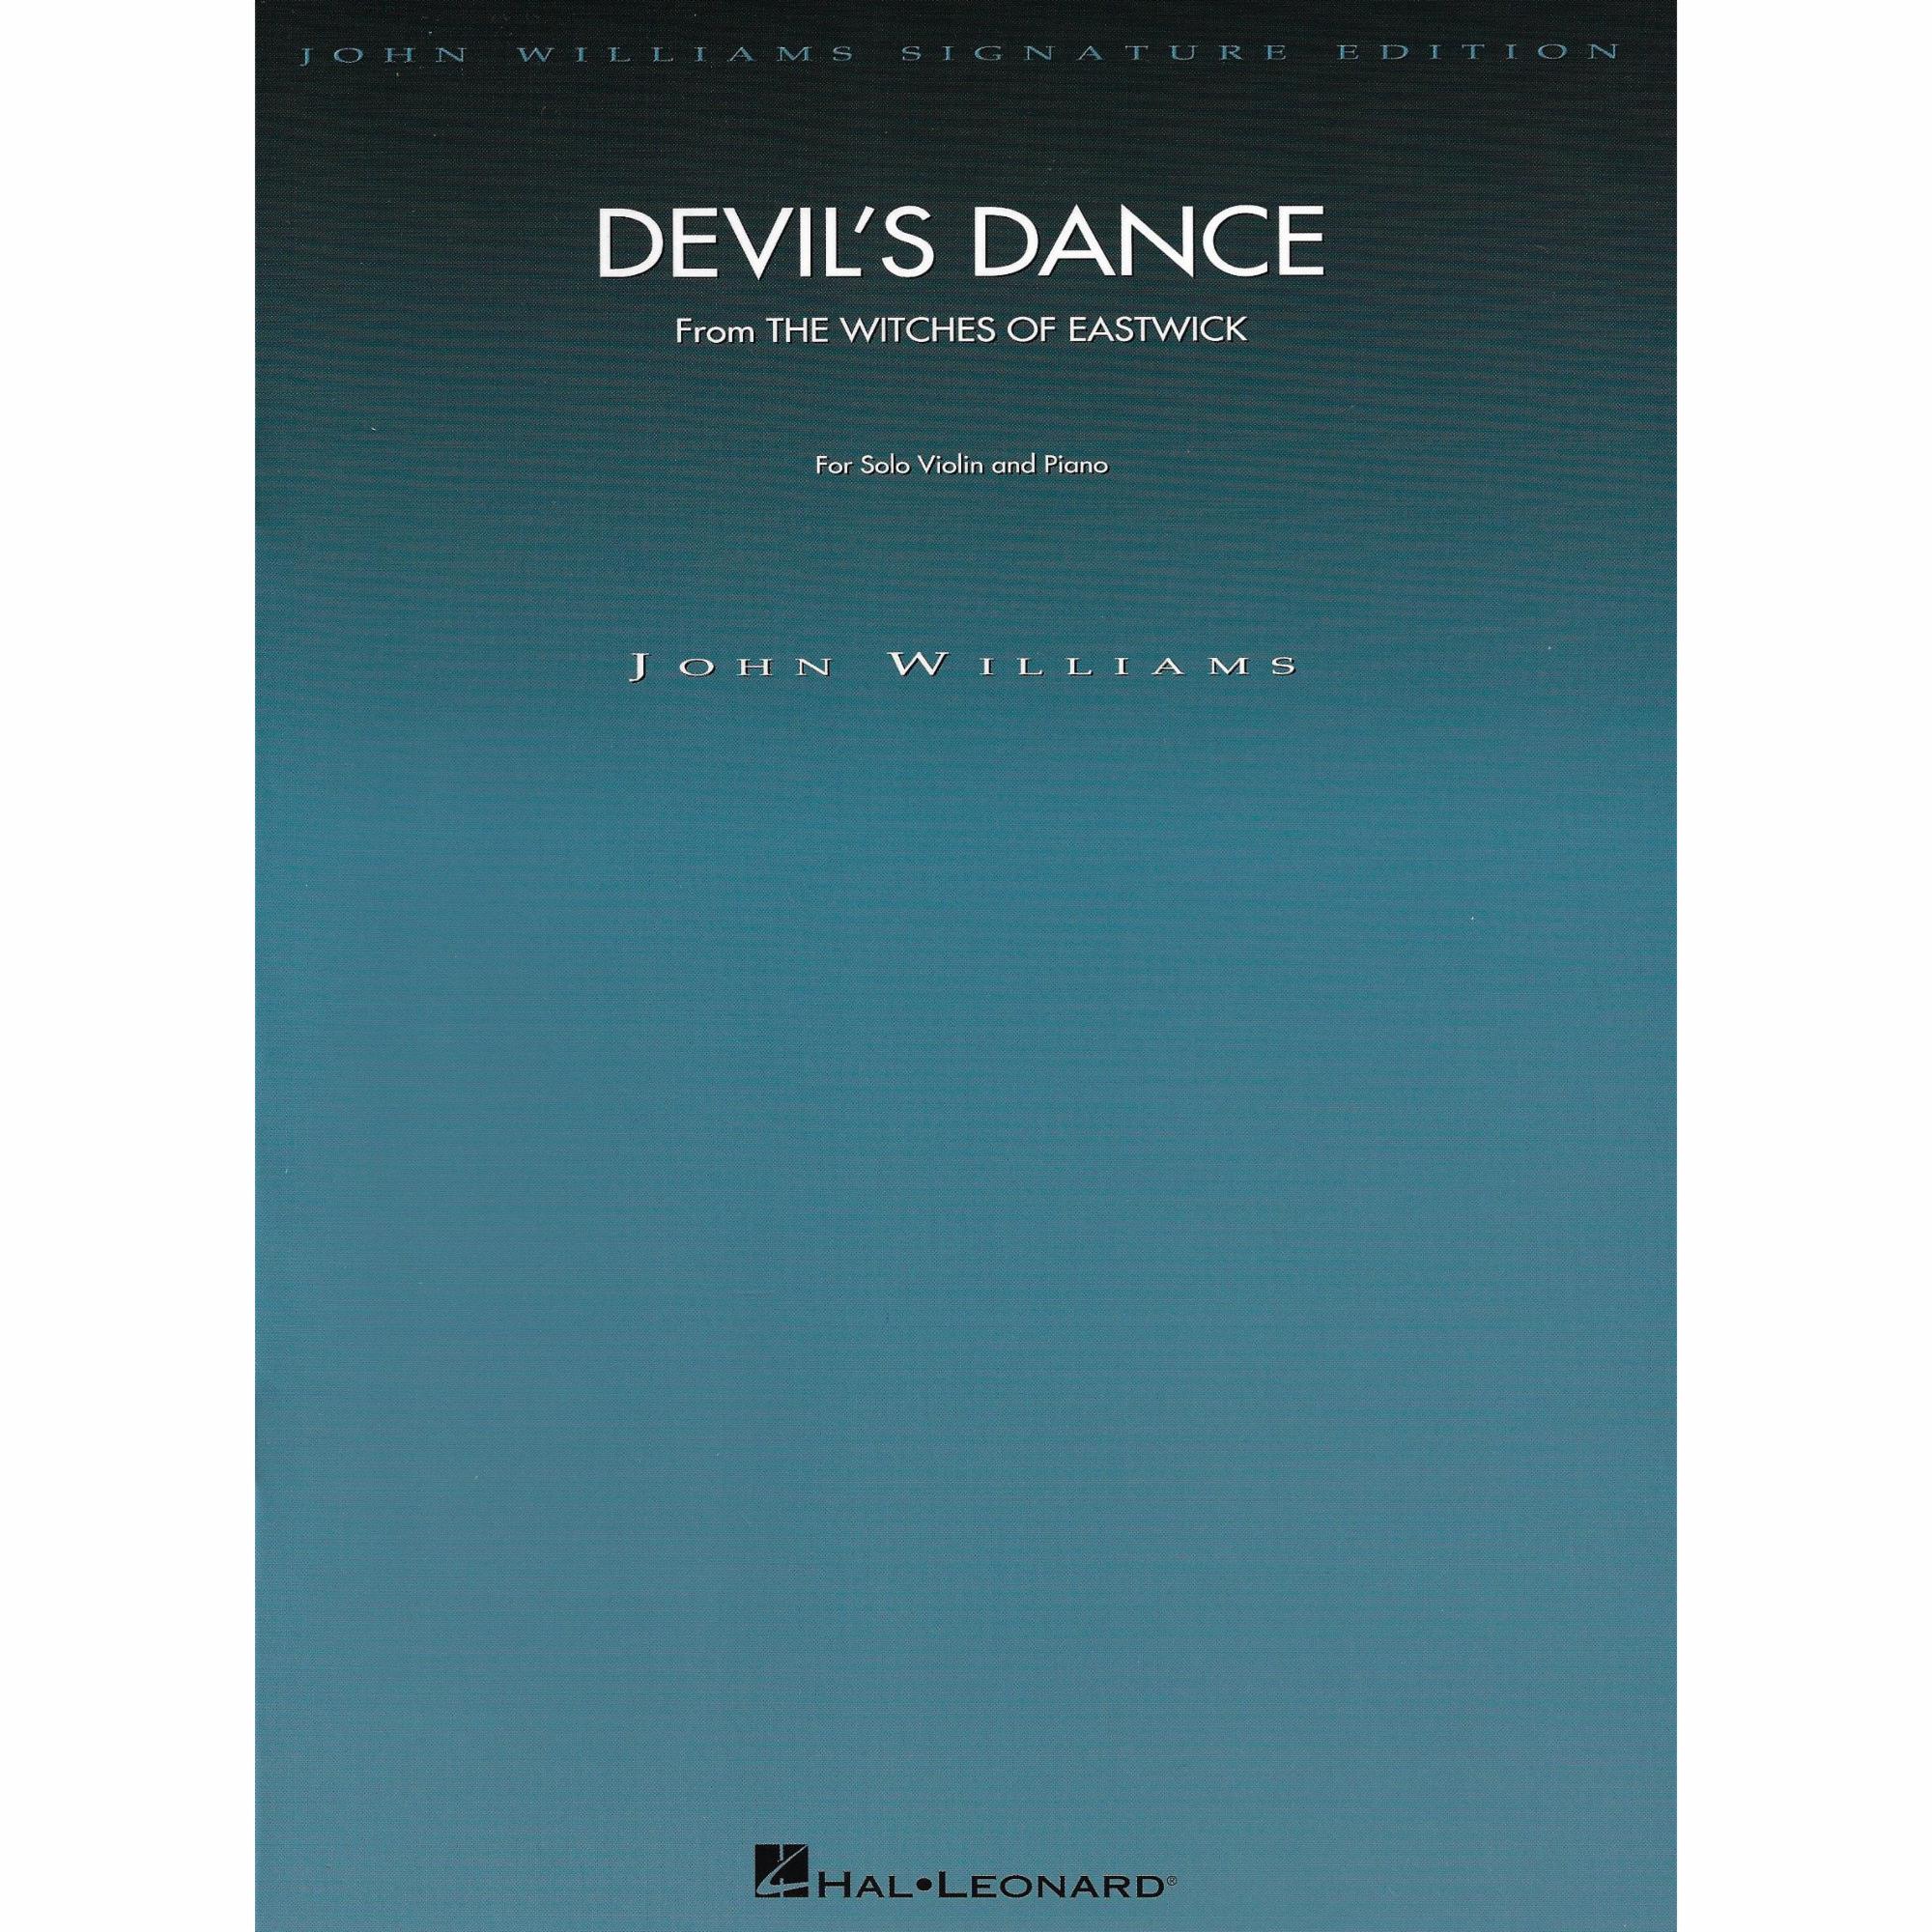 Devil's Dance for Violin and Piano